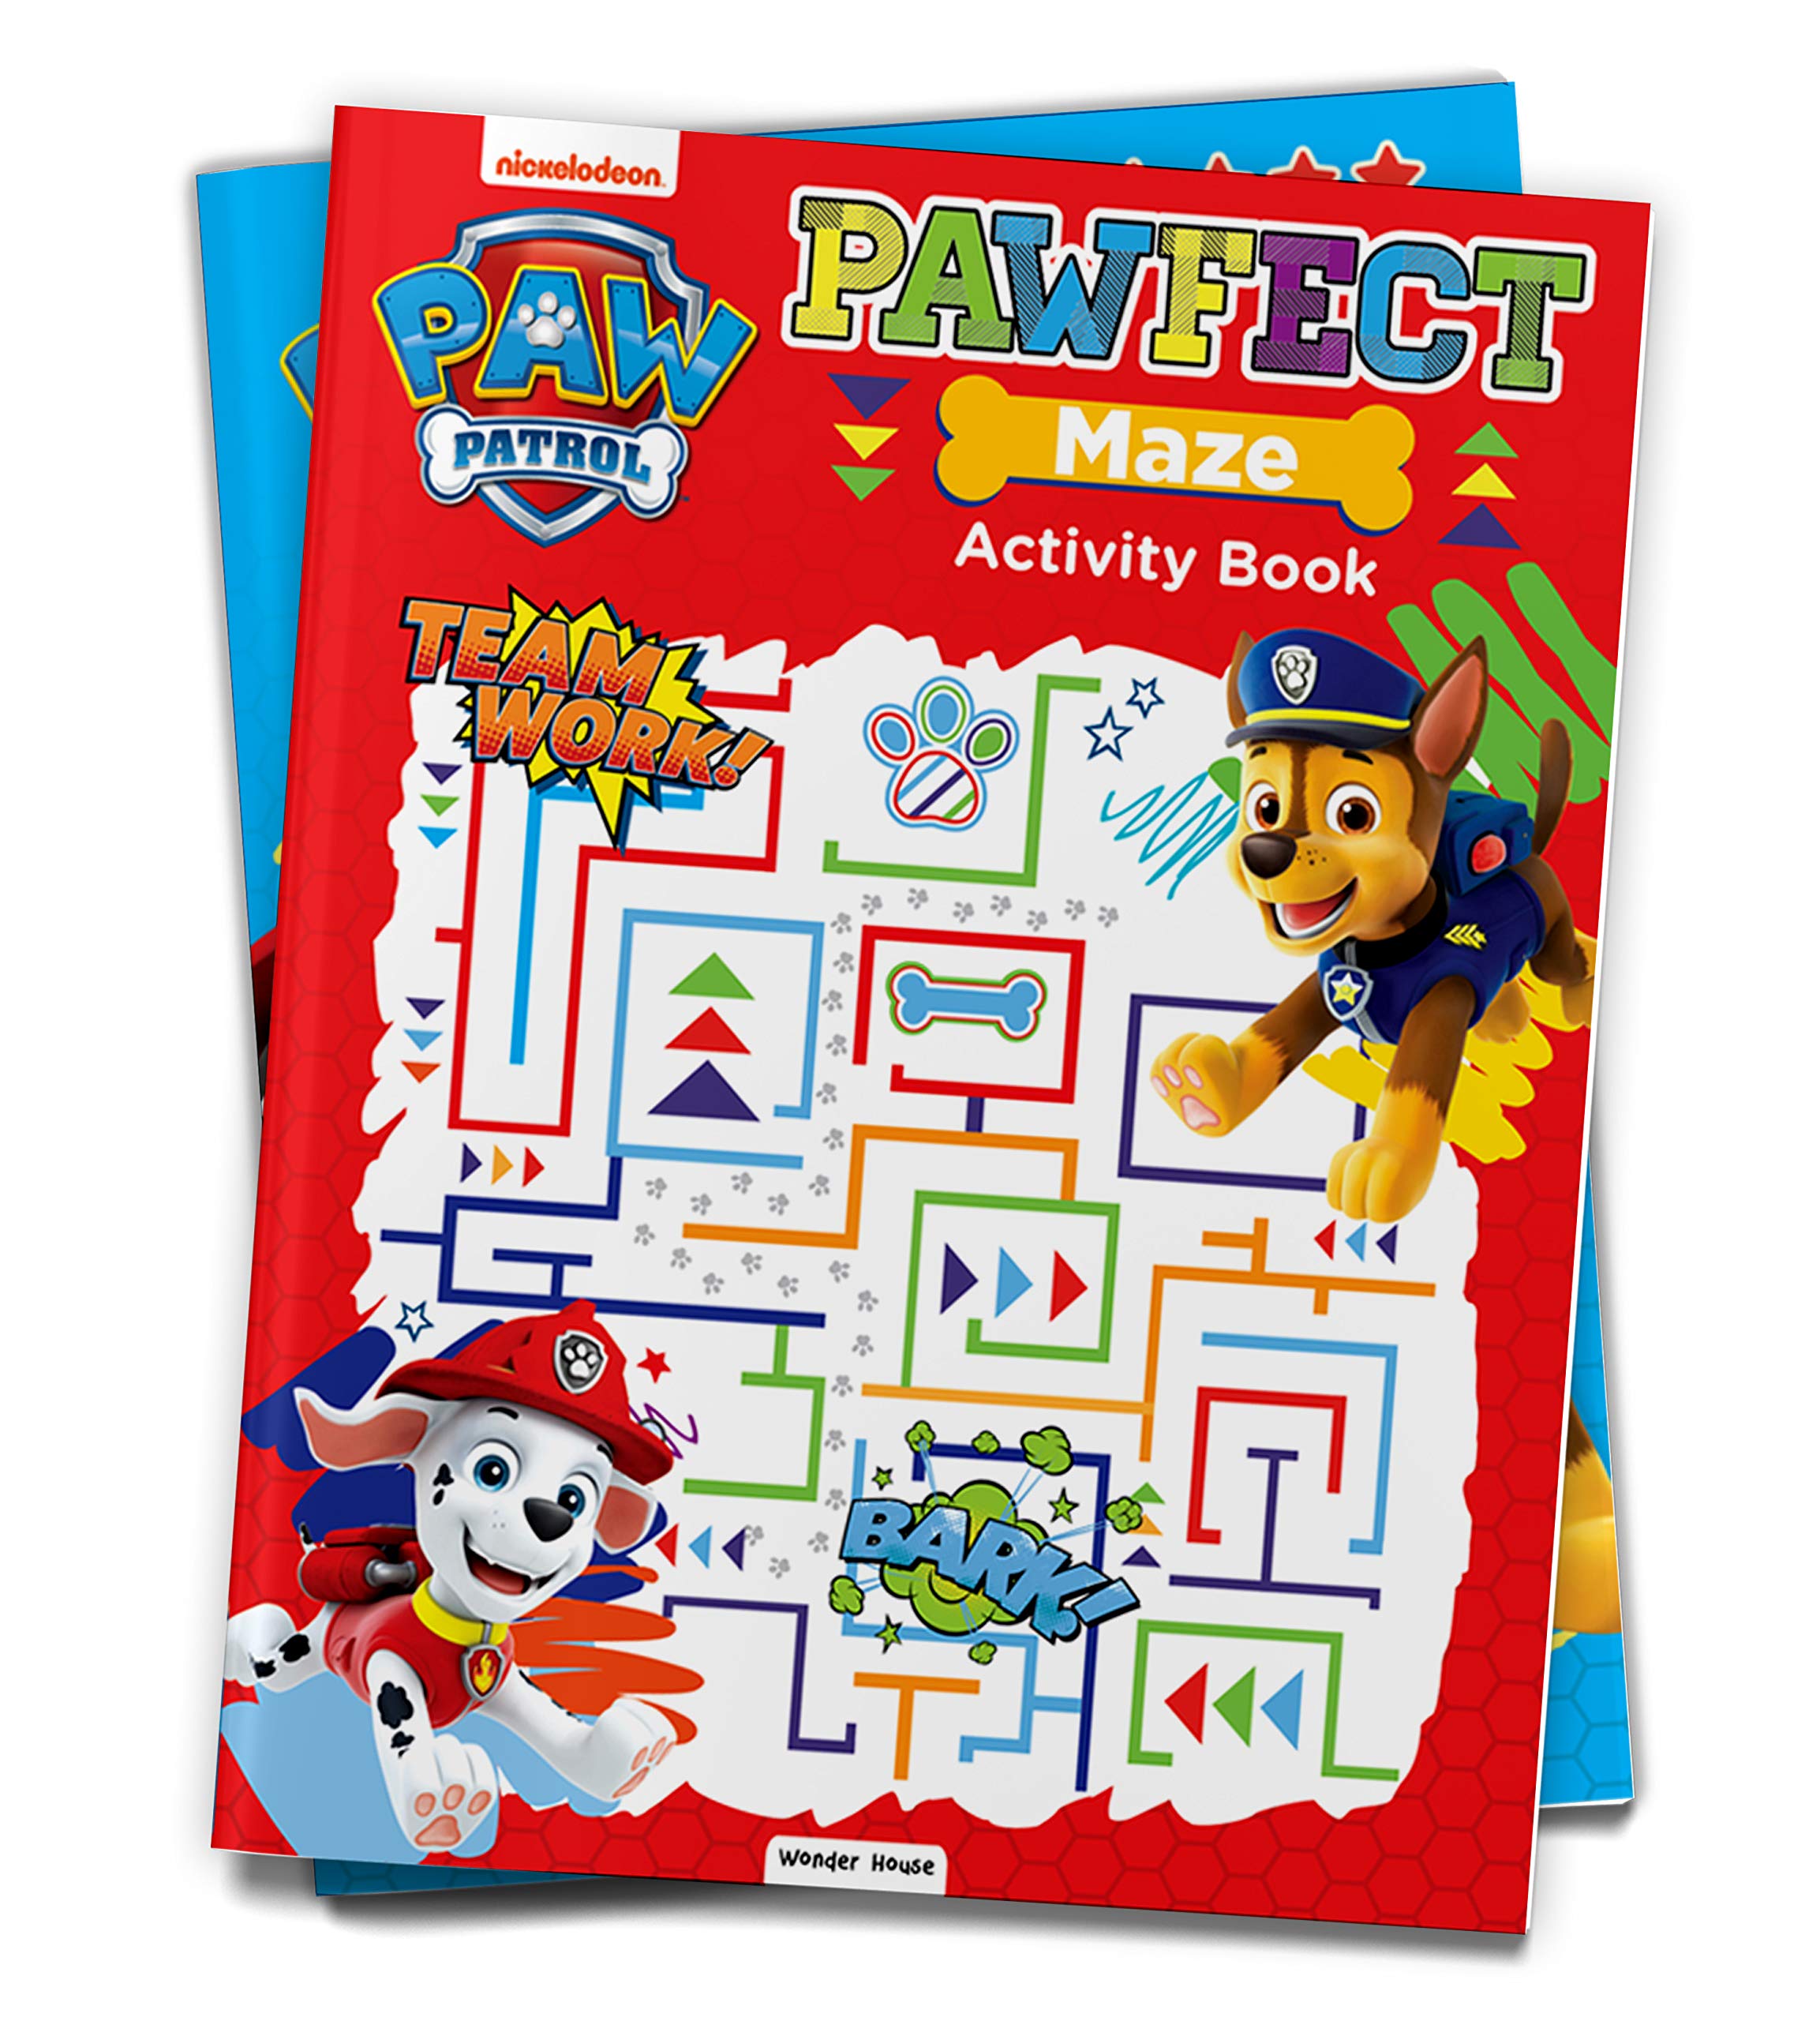 Paw Patrol Pawfect Maze Activity book